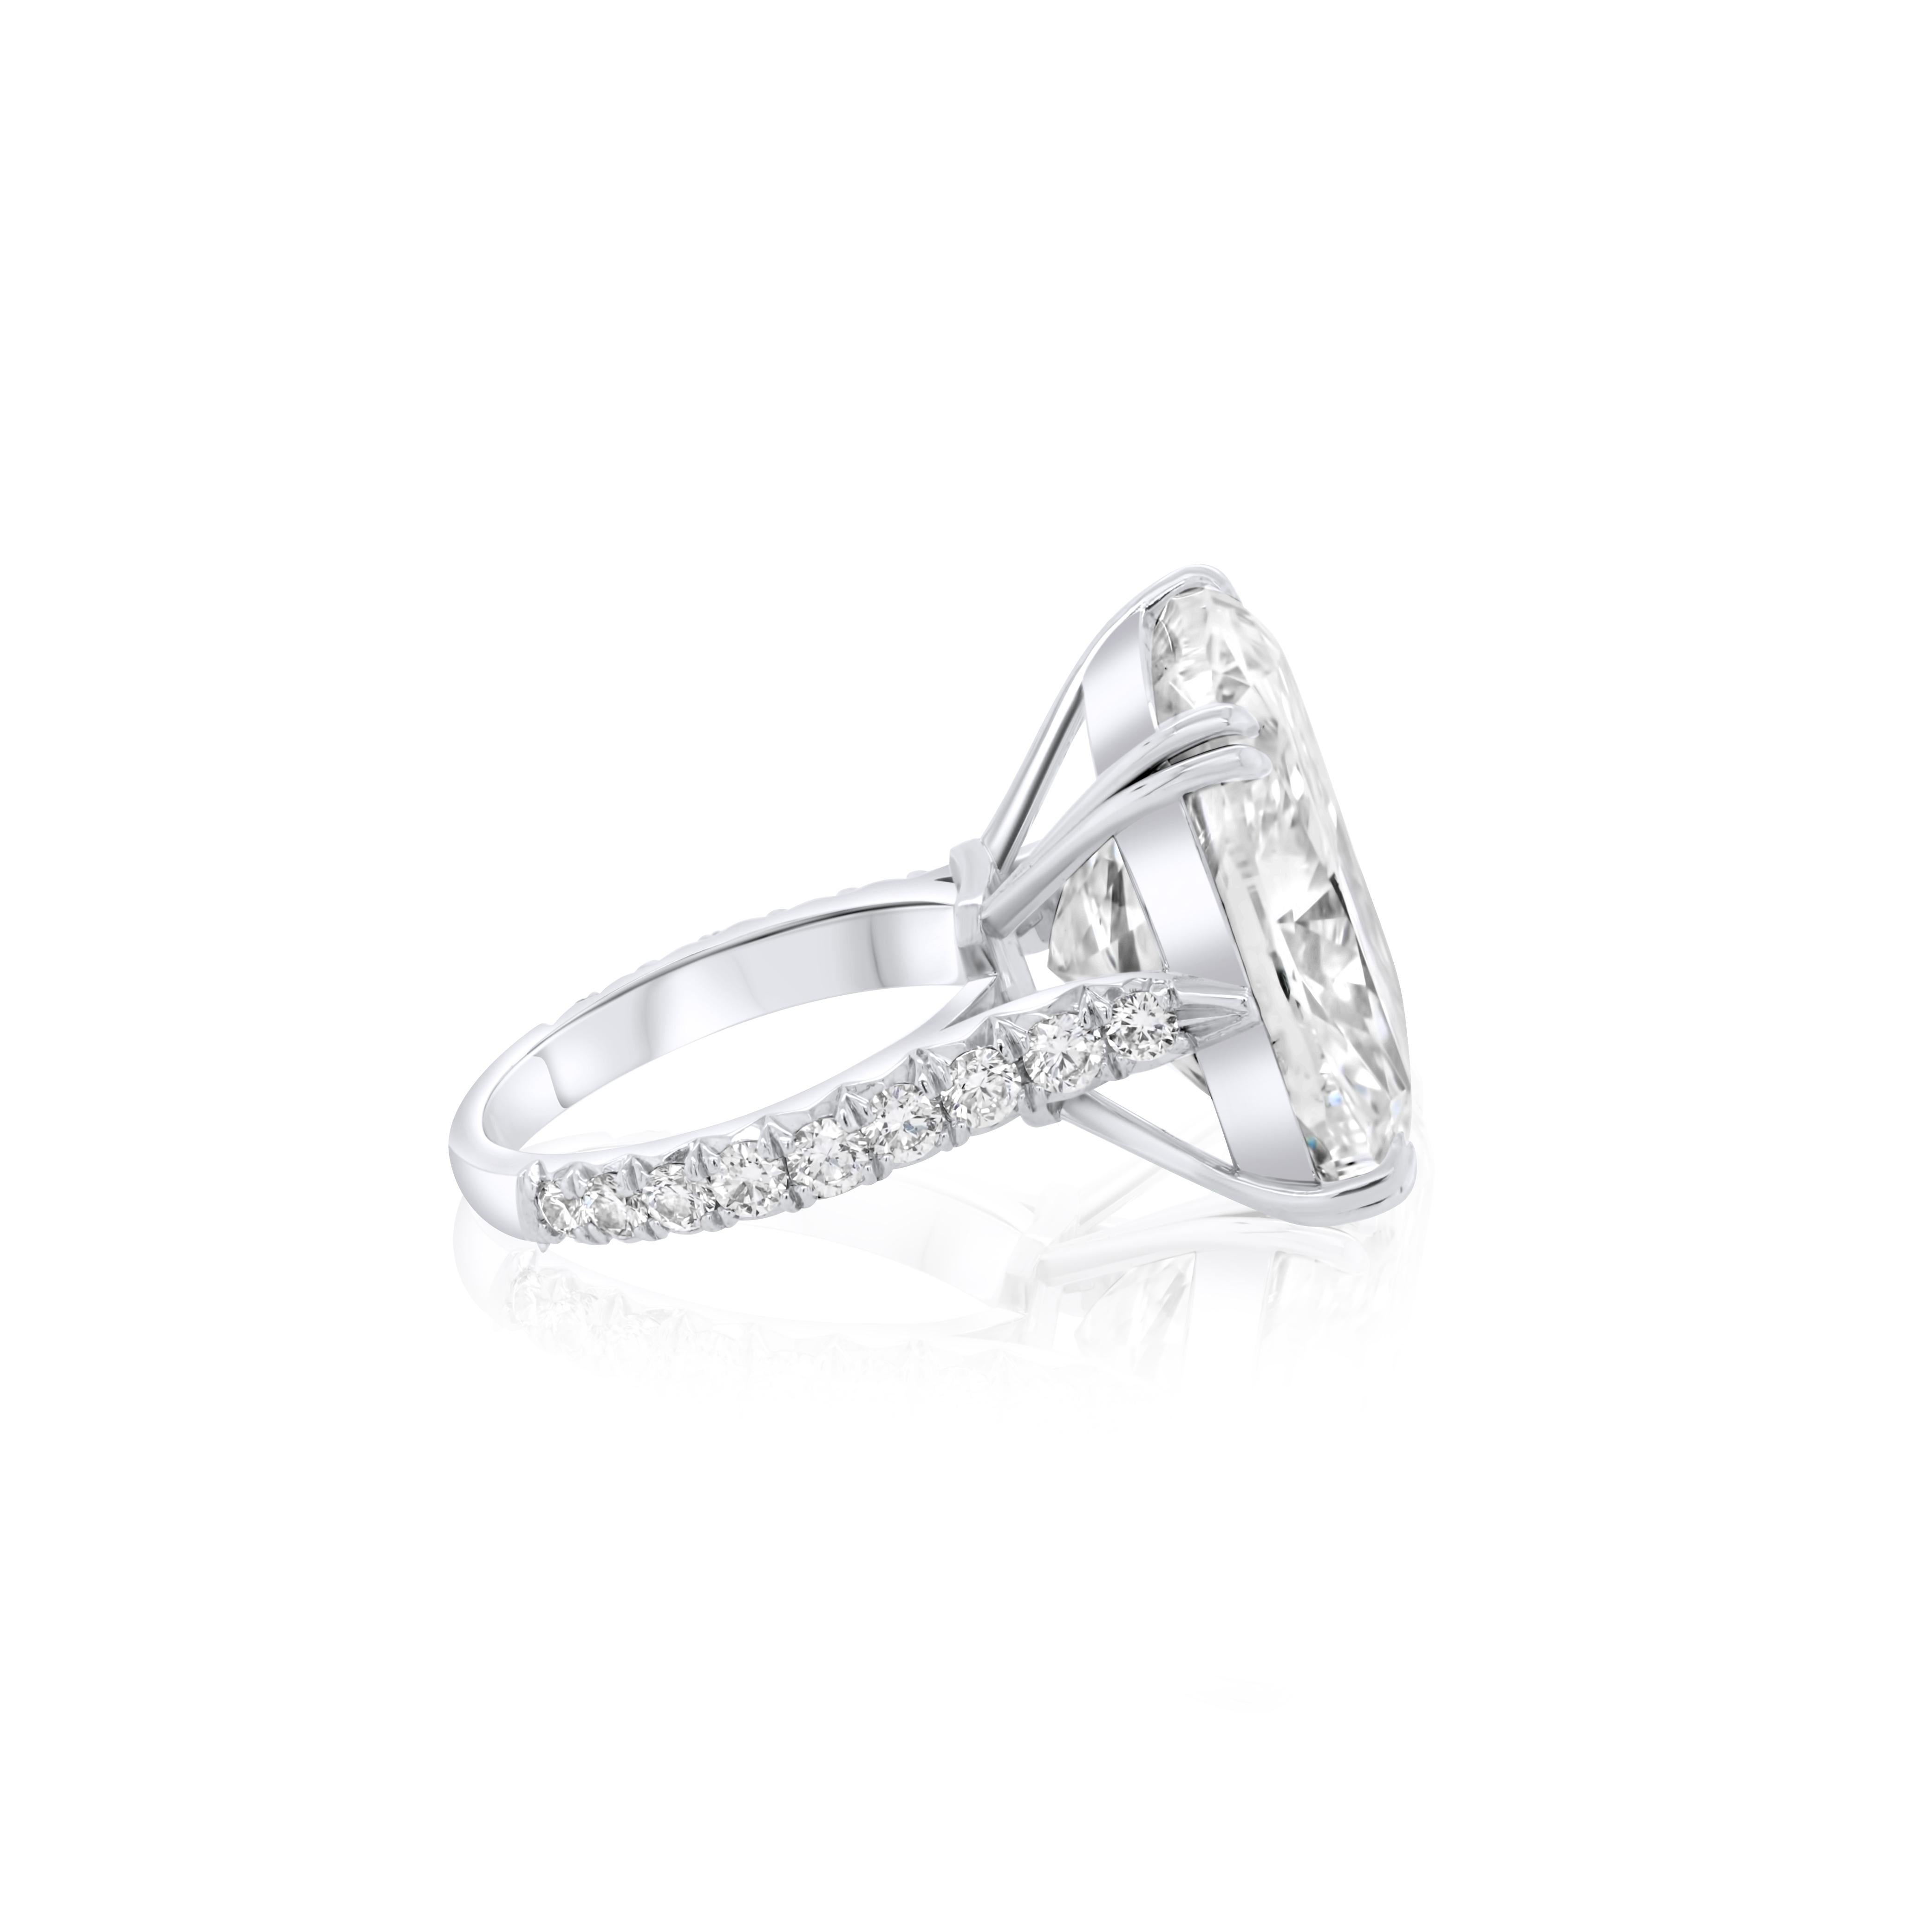 24.03 Carat Cushion Cut Diamond Engagement Ring For Sale 2